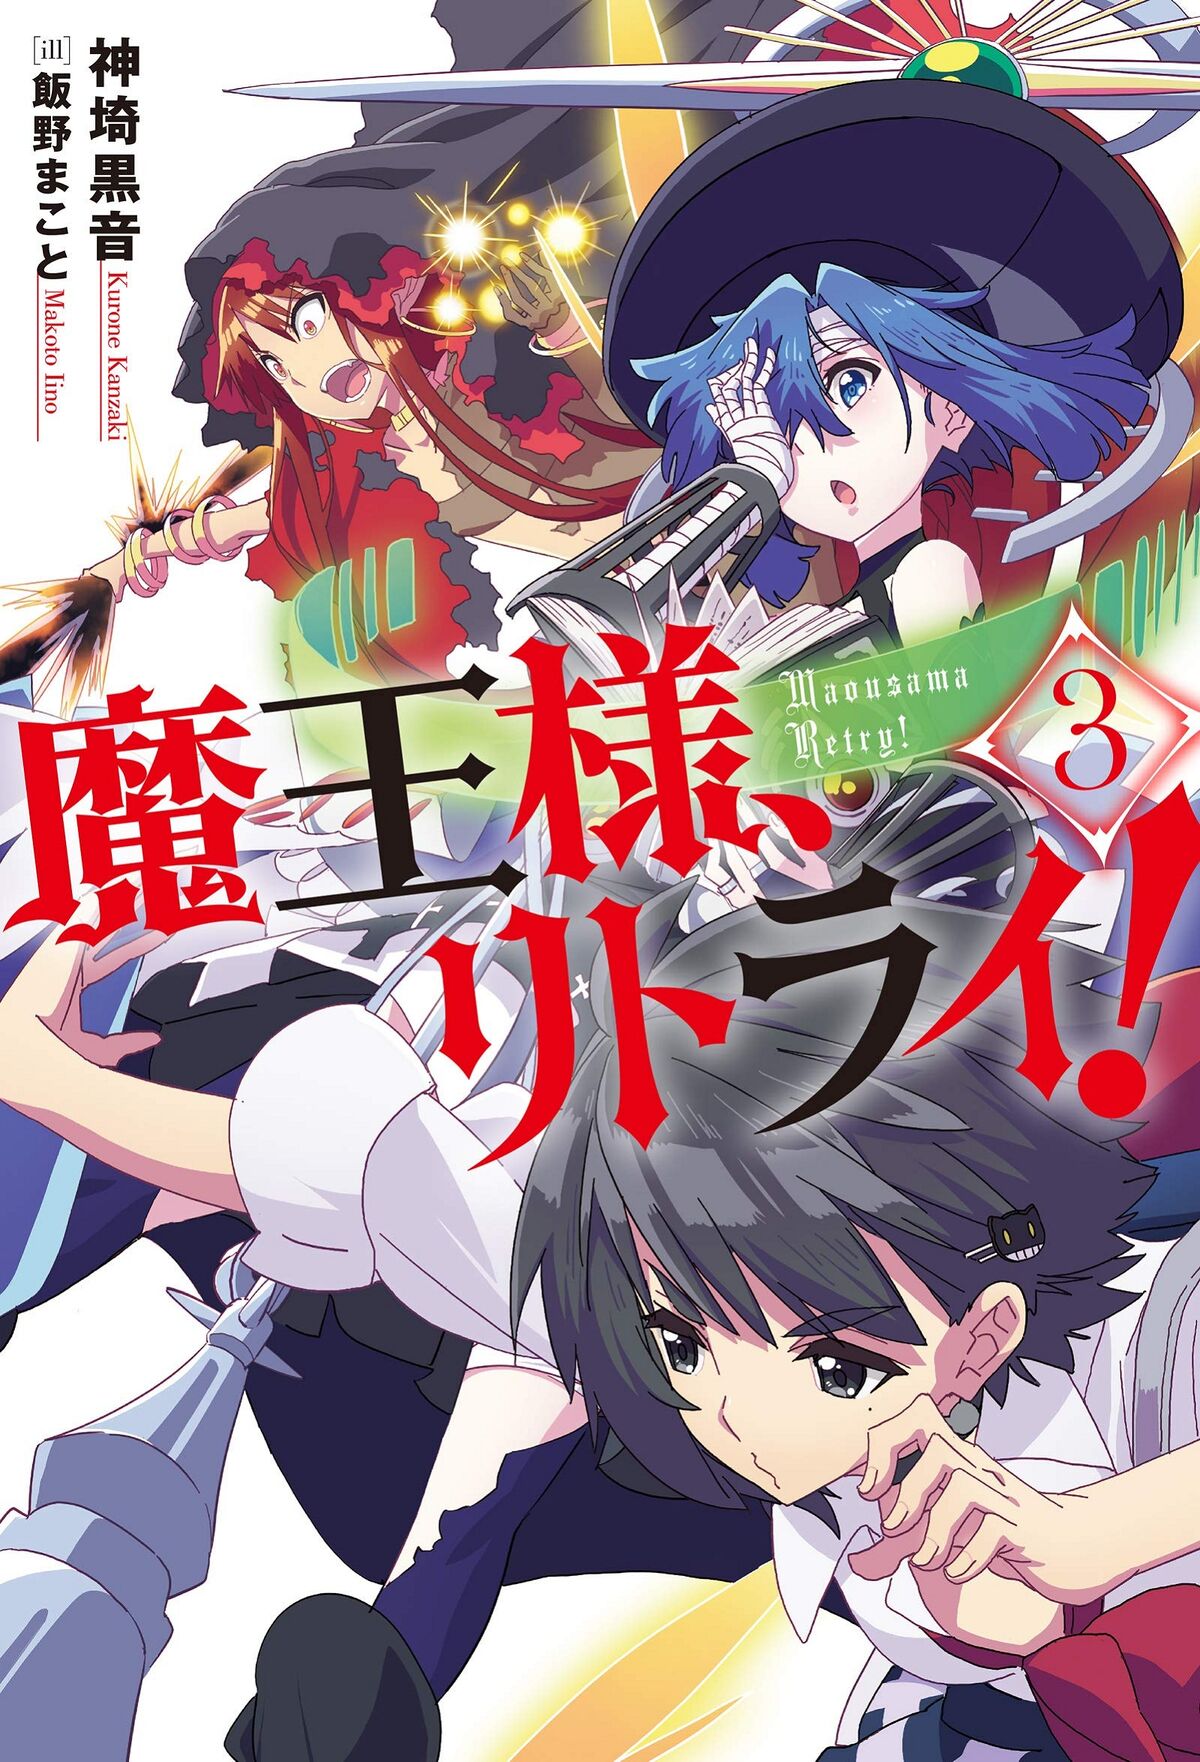 Manga Mogura RE on X: Maou-sama, Retry! saga by Kurone Kanzaki has  800,000 copies (including light novel & 2 manga) in circulation.   / X